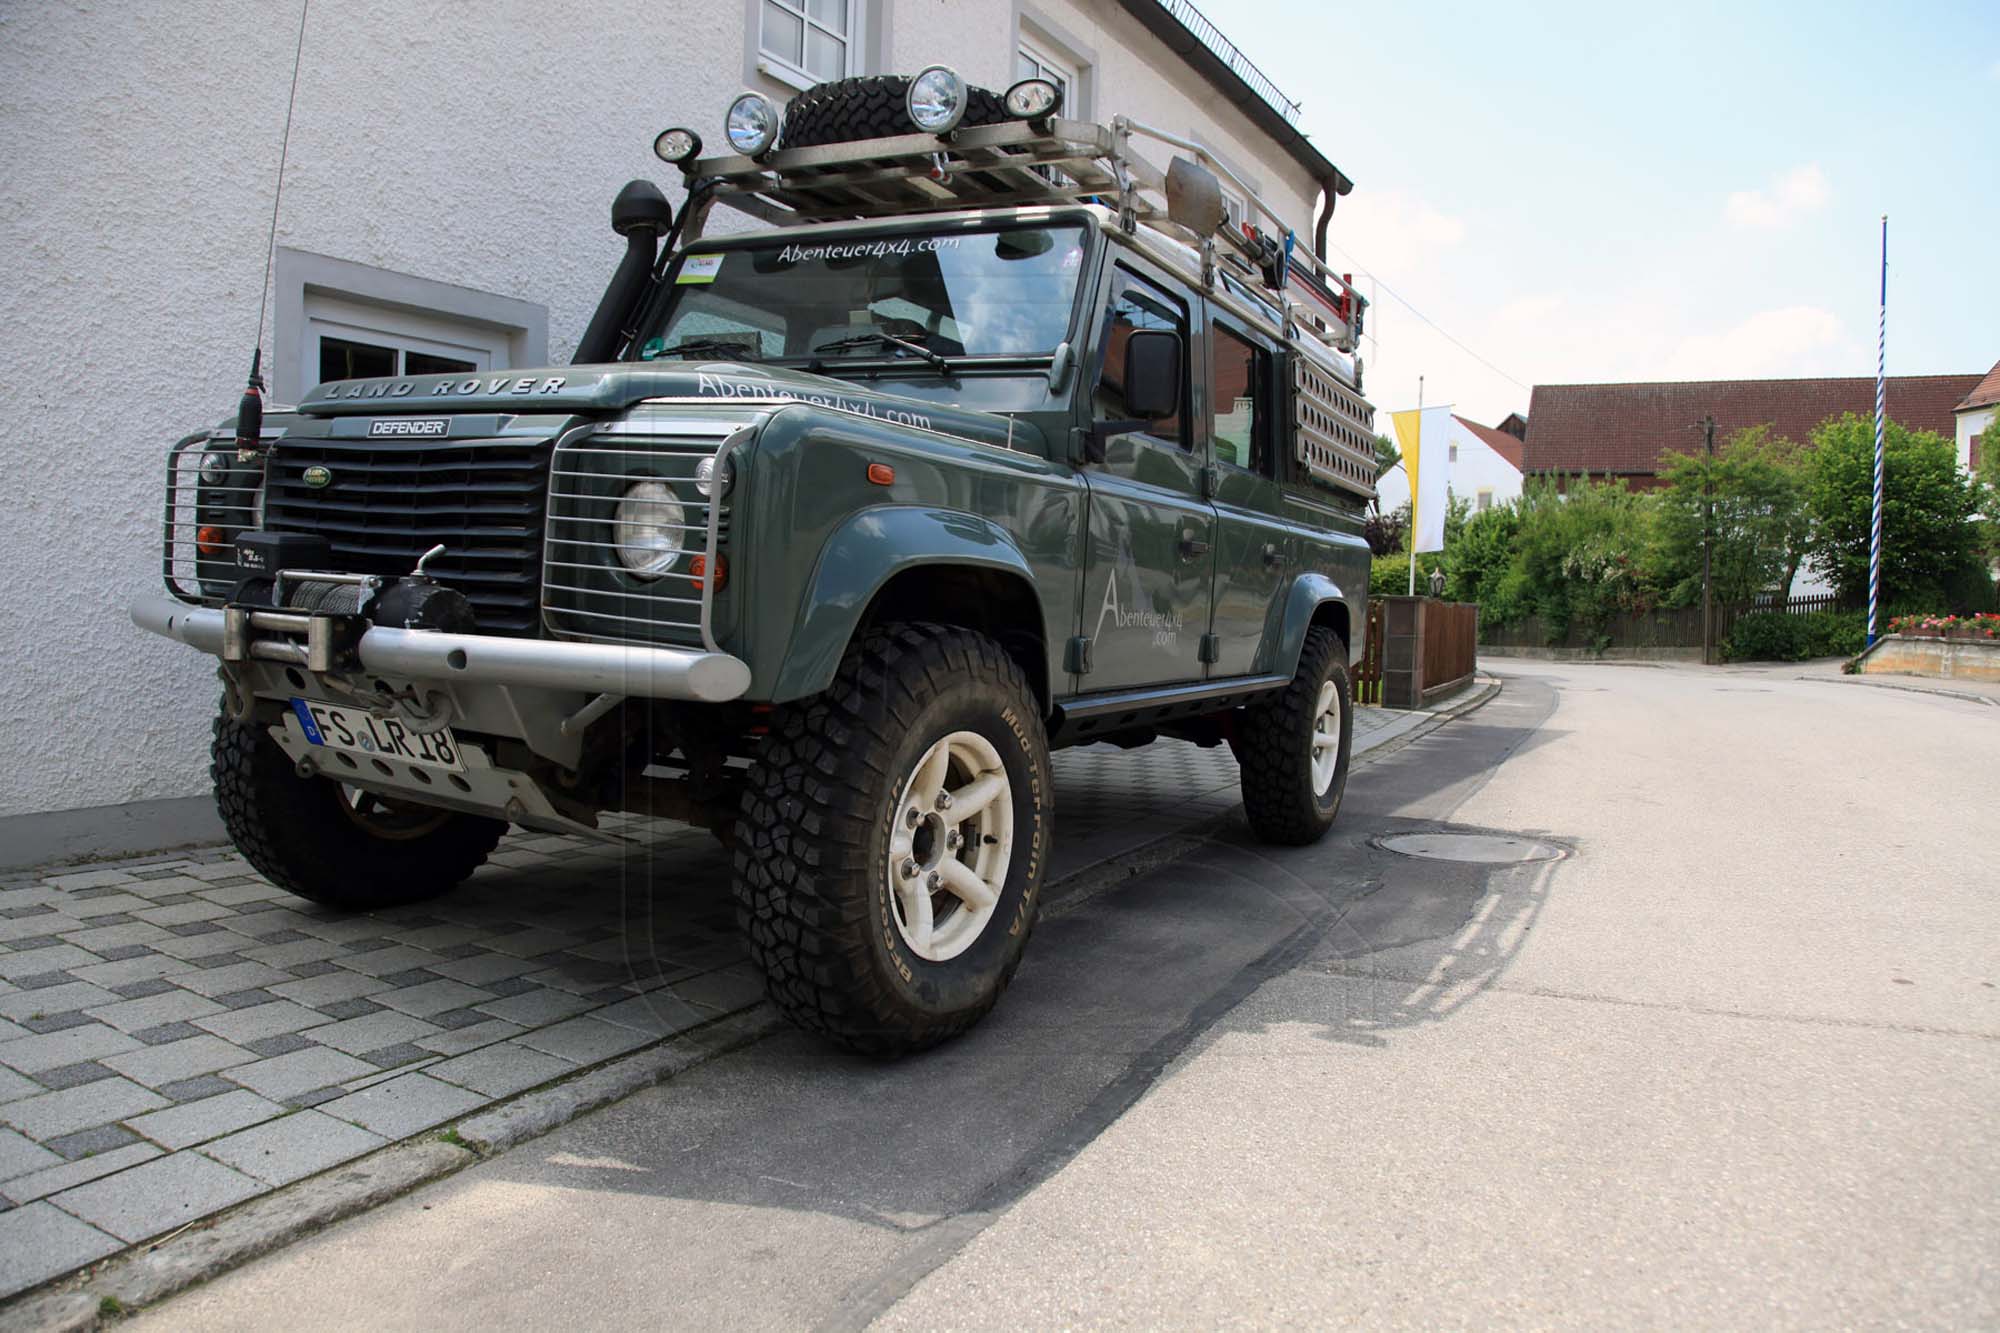 Abenteuer4x4 Rock Sliders - for Land Rover Defender 90/110/130 [***6-8 WEEK LEAD-TIME***]